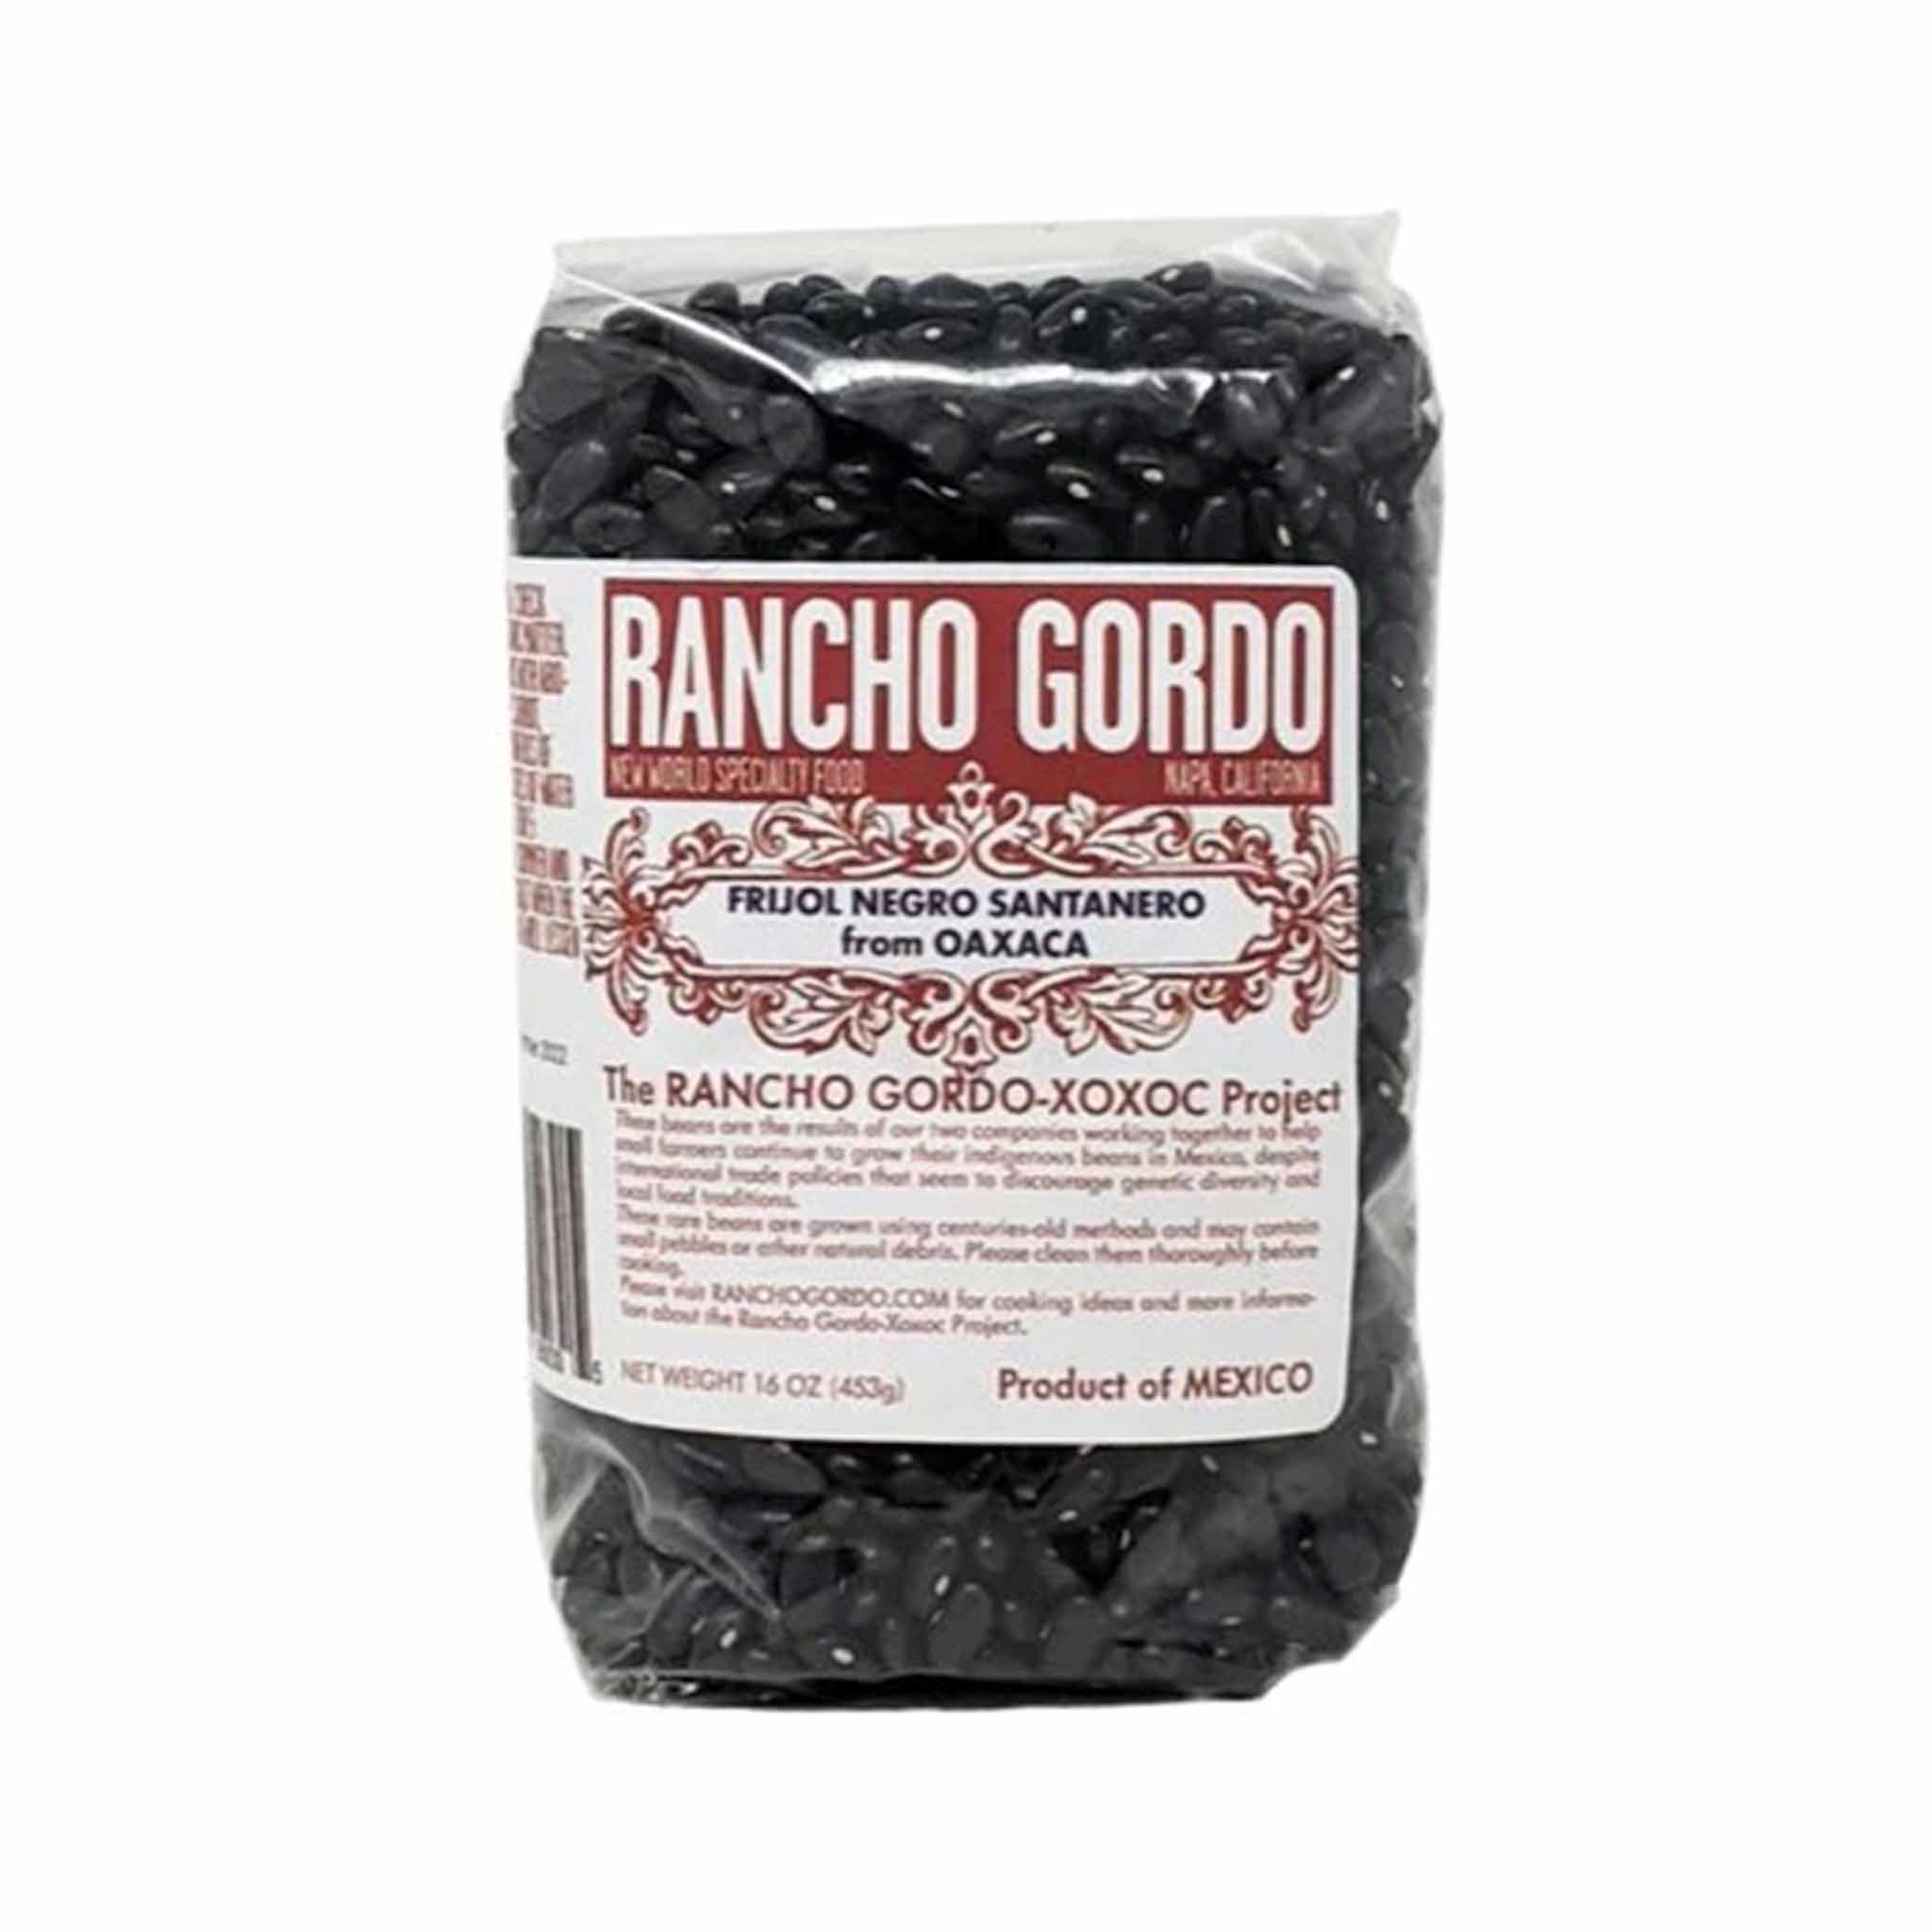 Rancho Gordo Santanero Negro Beans